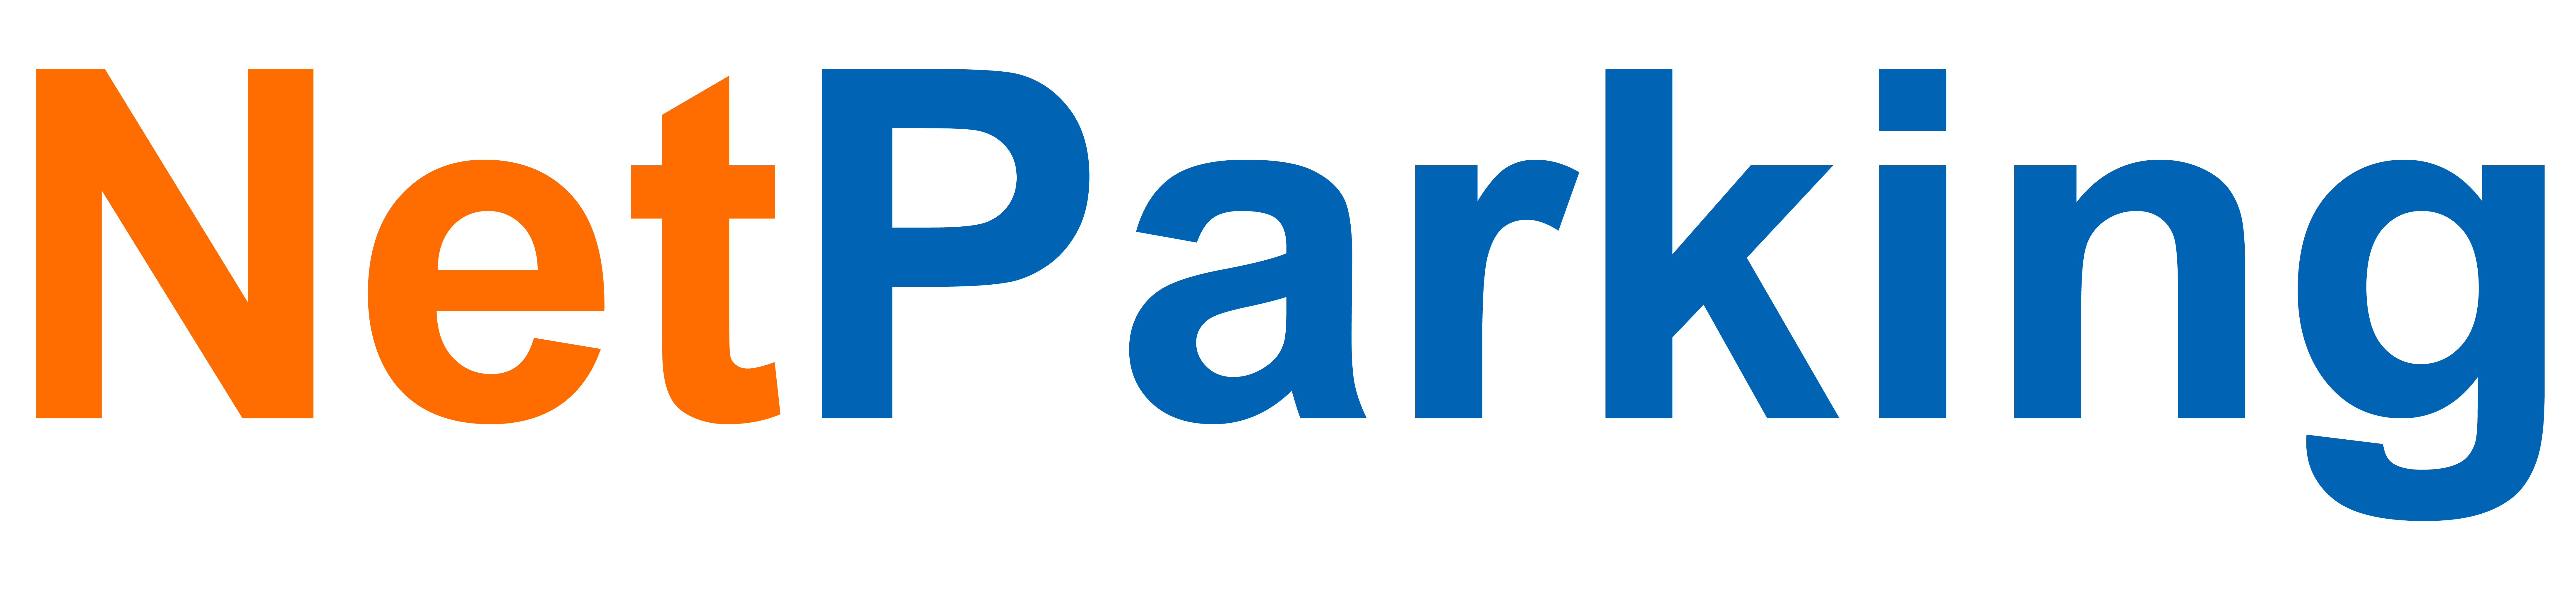 Netparking - Software gestione parchegg